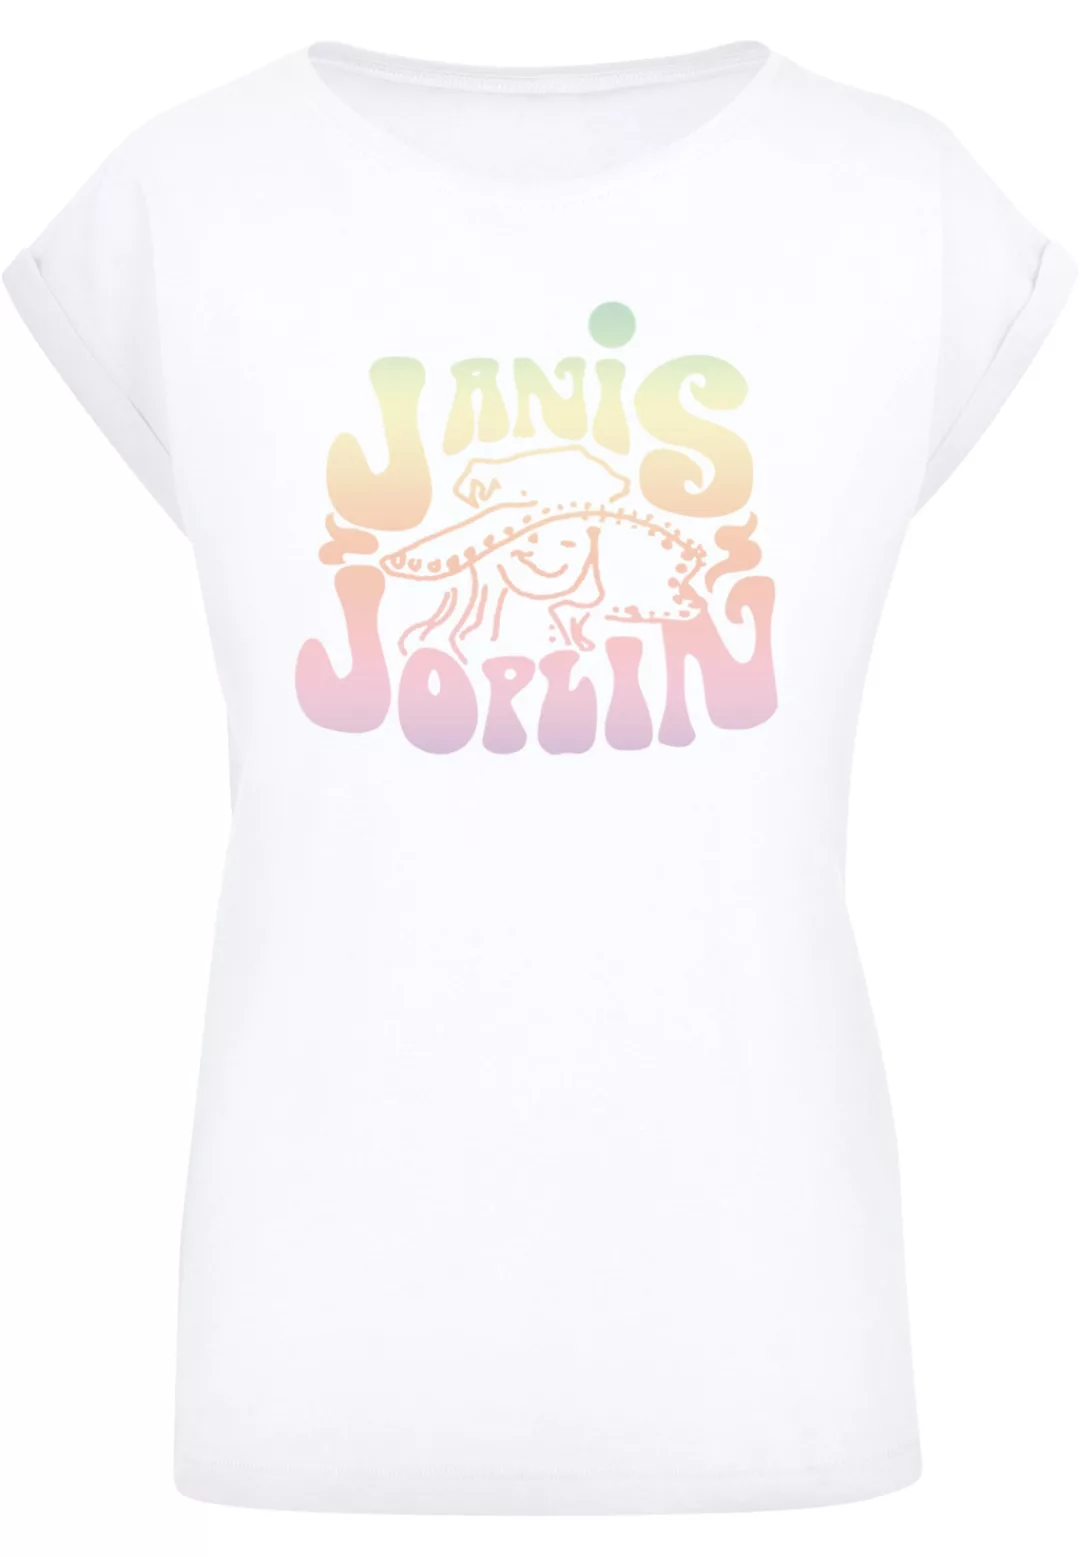 F4NT4STIC T-Shirt "Janis Joplin Pastel Logo", Print günstig online kaufen